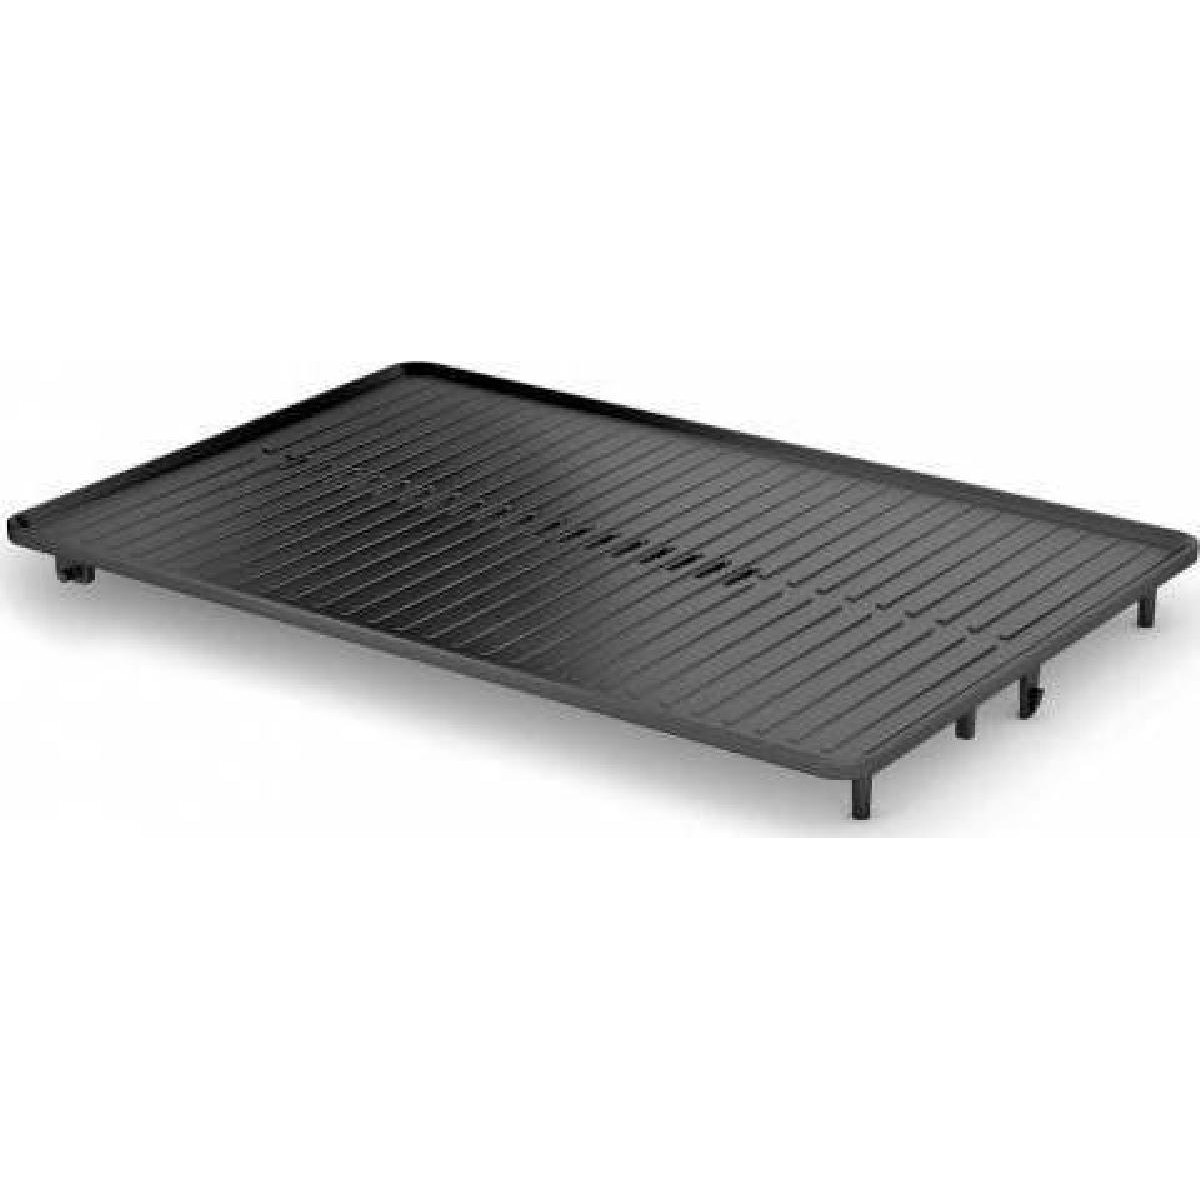 WMF Lono Table Ribbed table grill 2000 watt (0415330011)